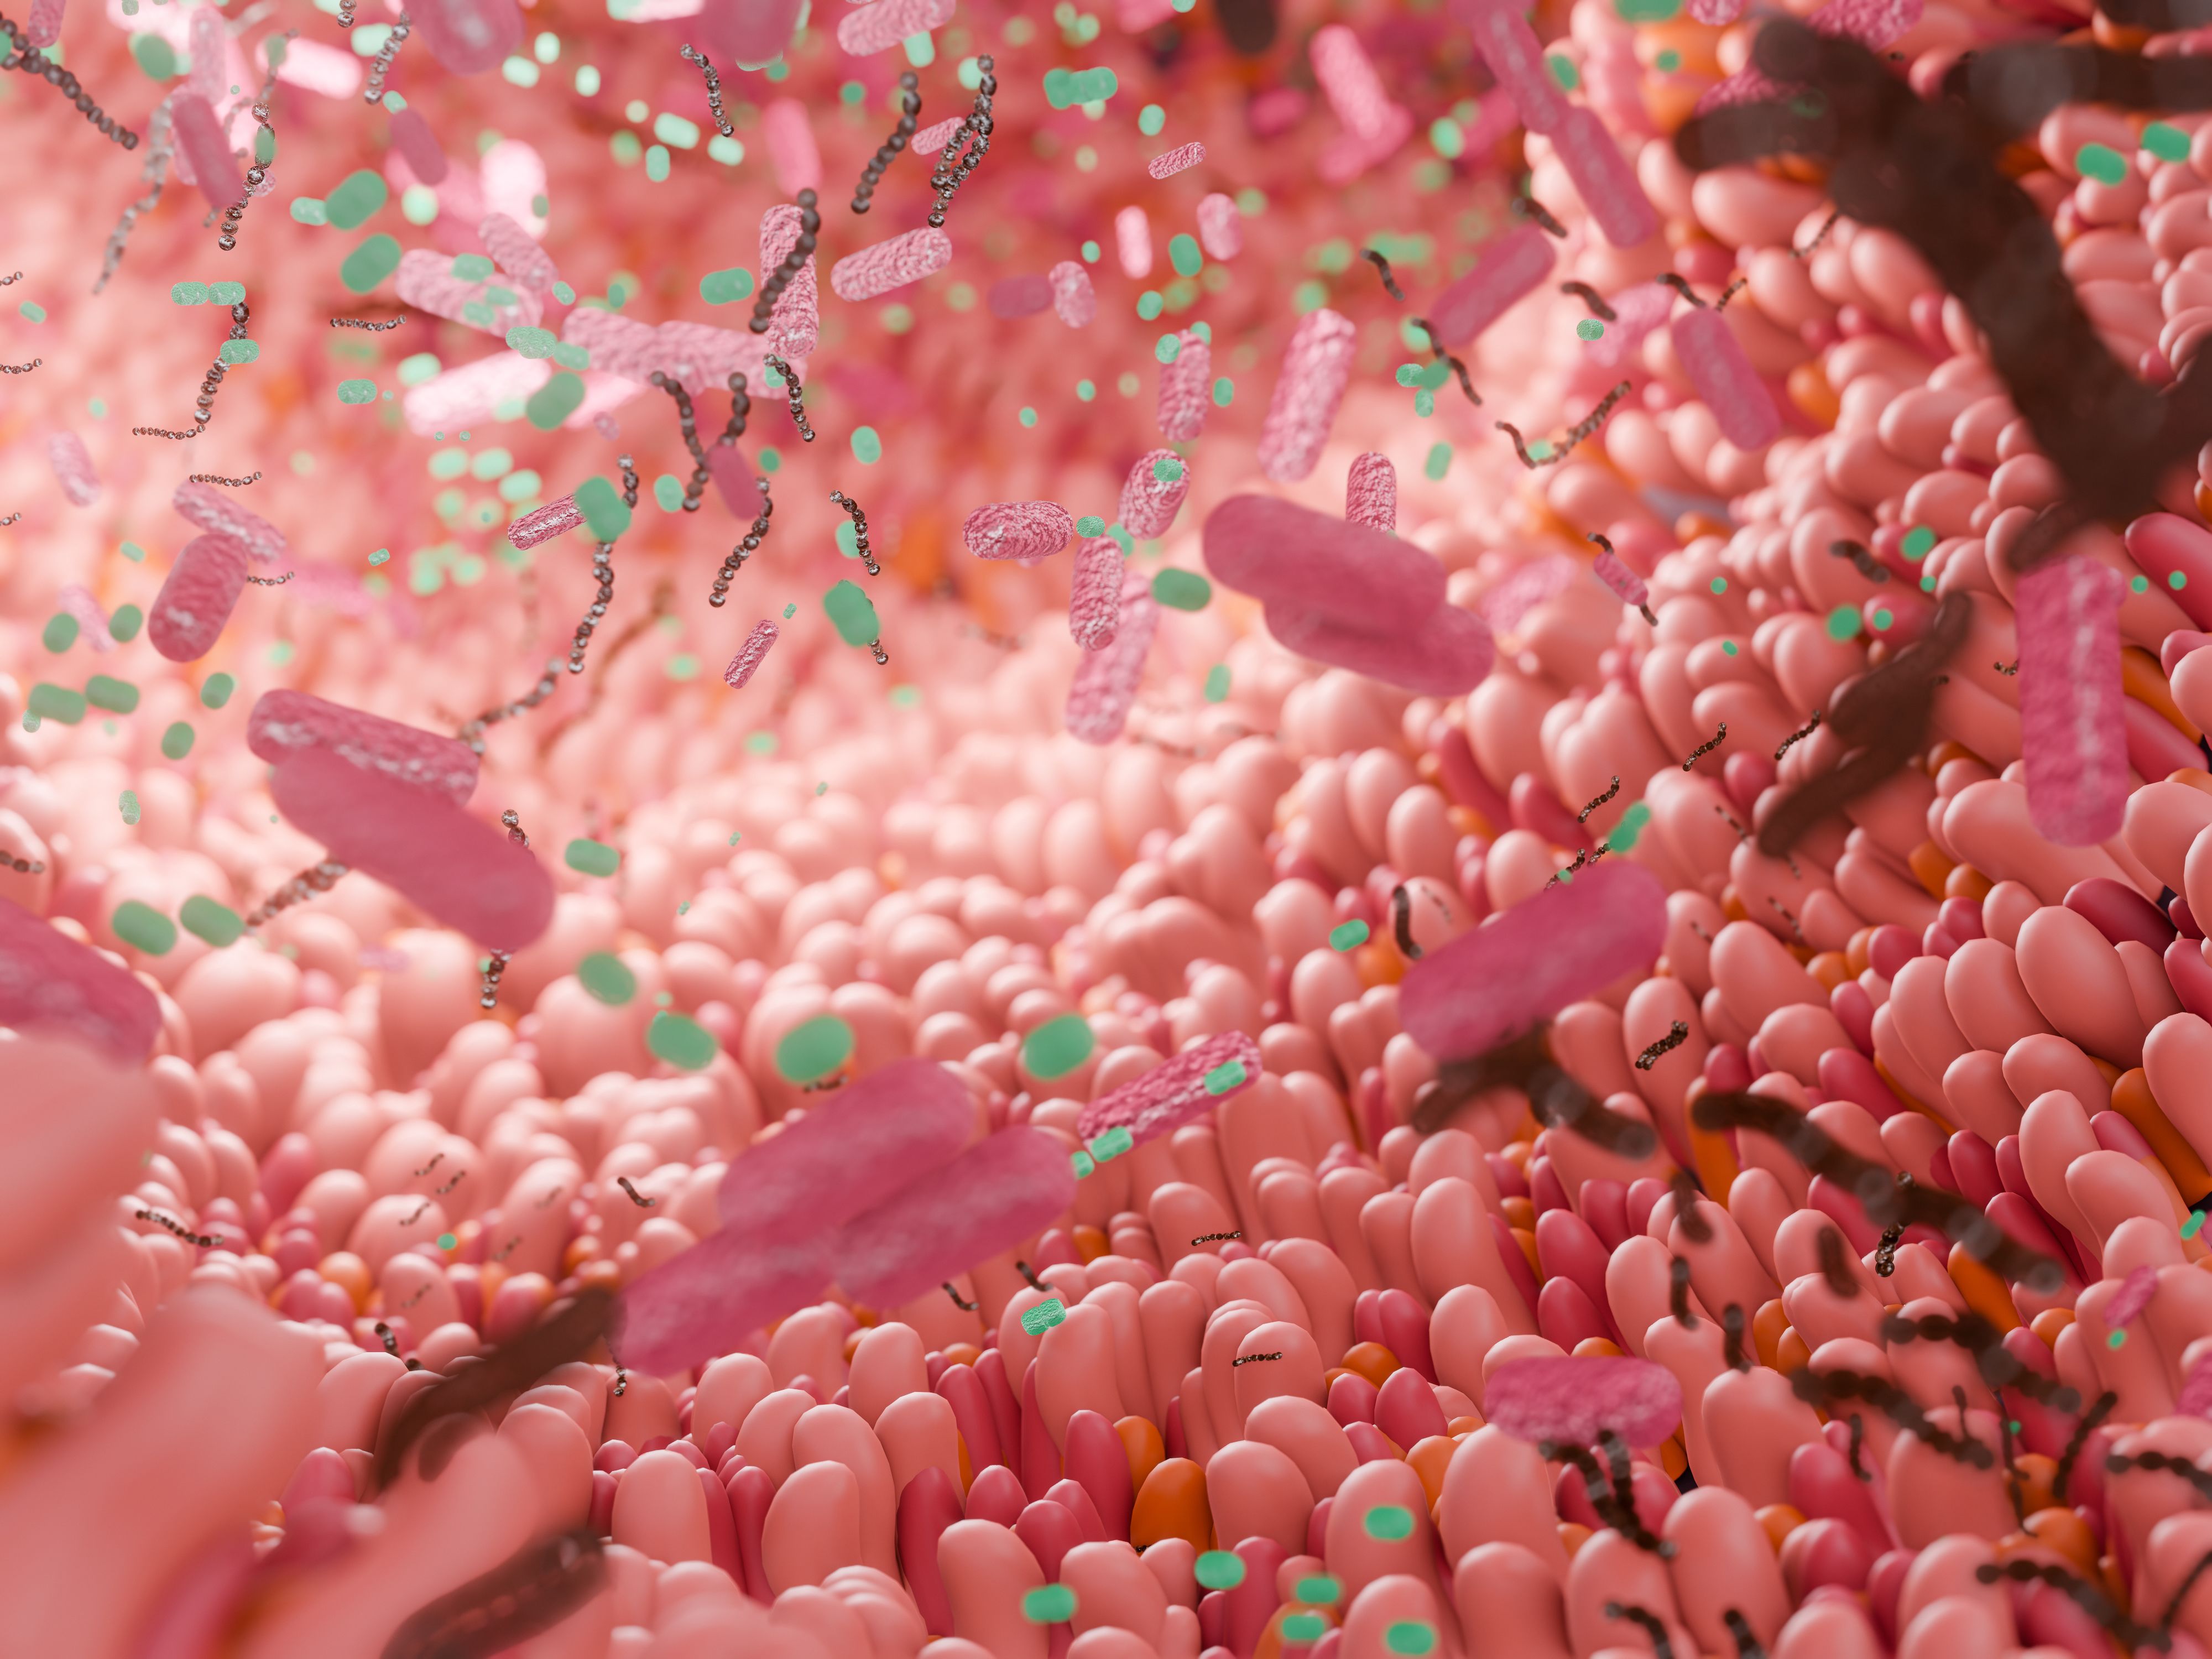 Human intestine with microbiome. Credit: OLEKSANDRA TROIAN/ Getty. 